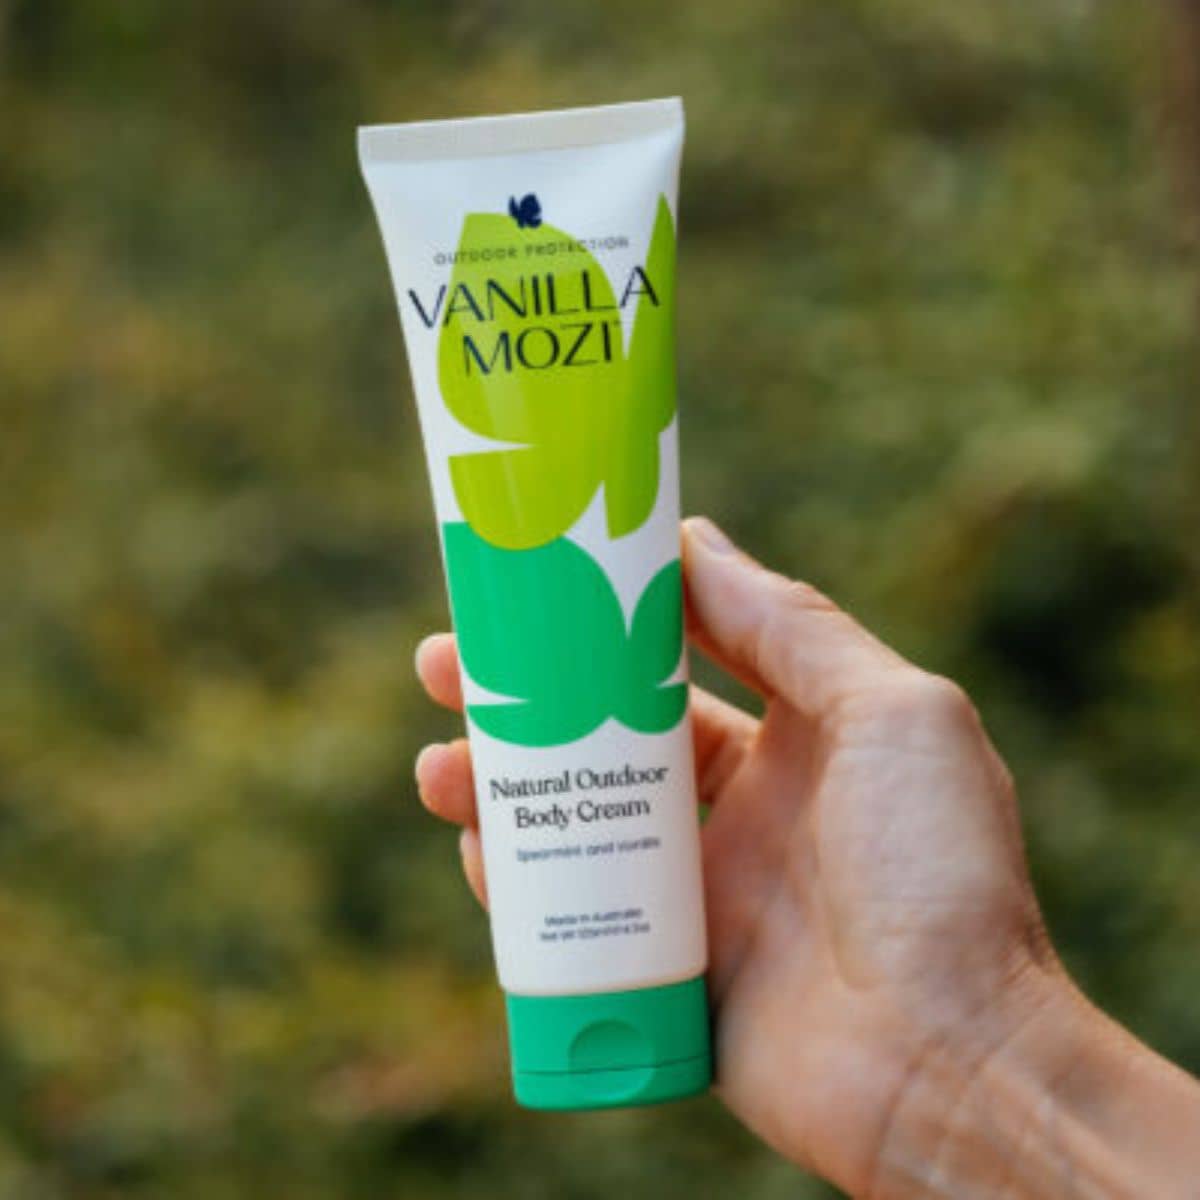 Vanilla Mozi Natural Outdoor Body Cream